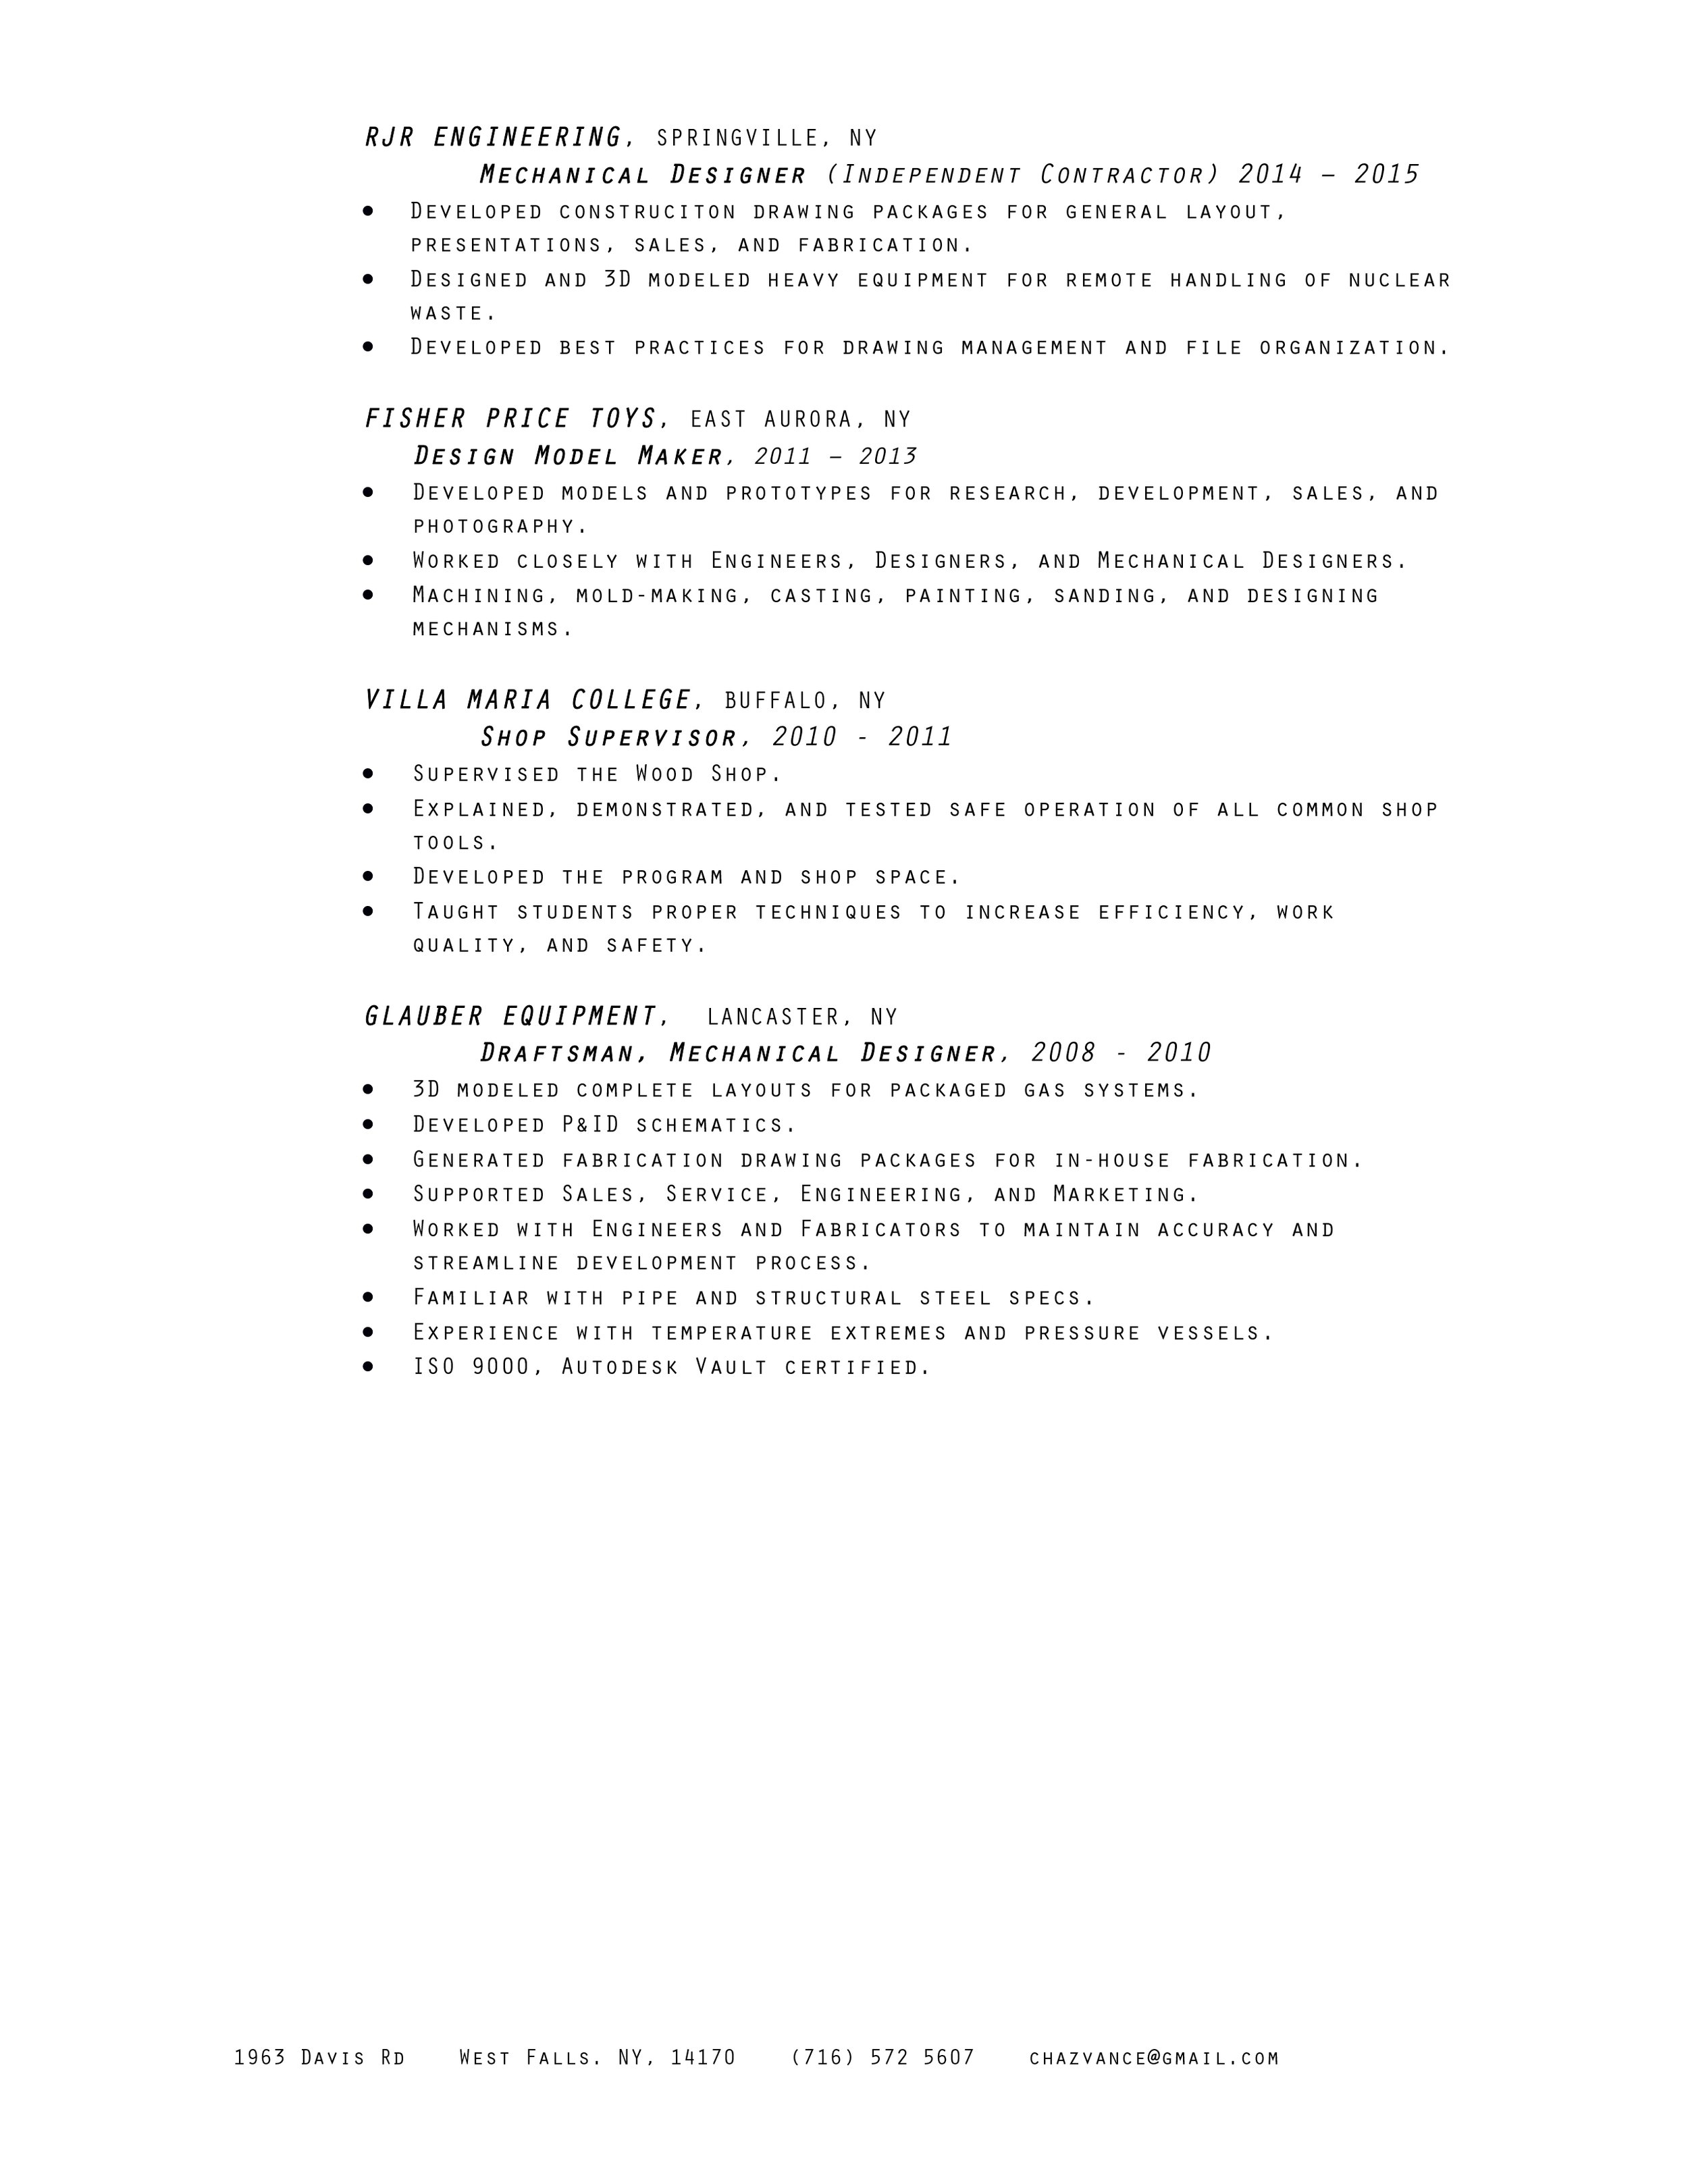 Resume Page 2.jpg